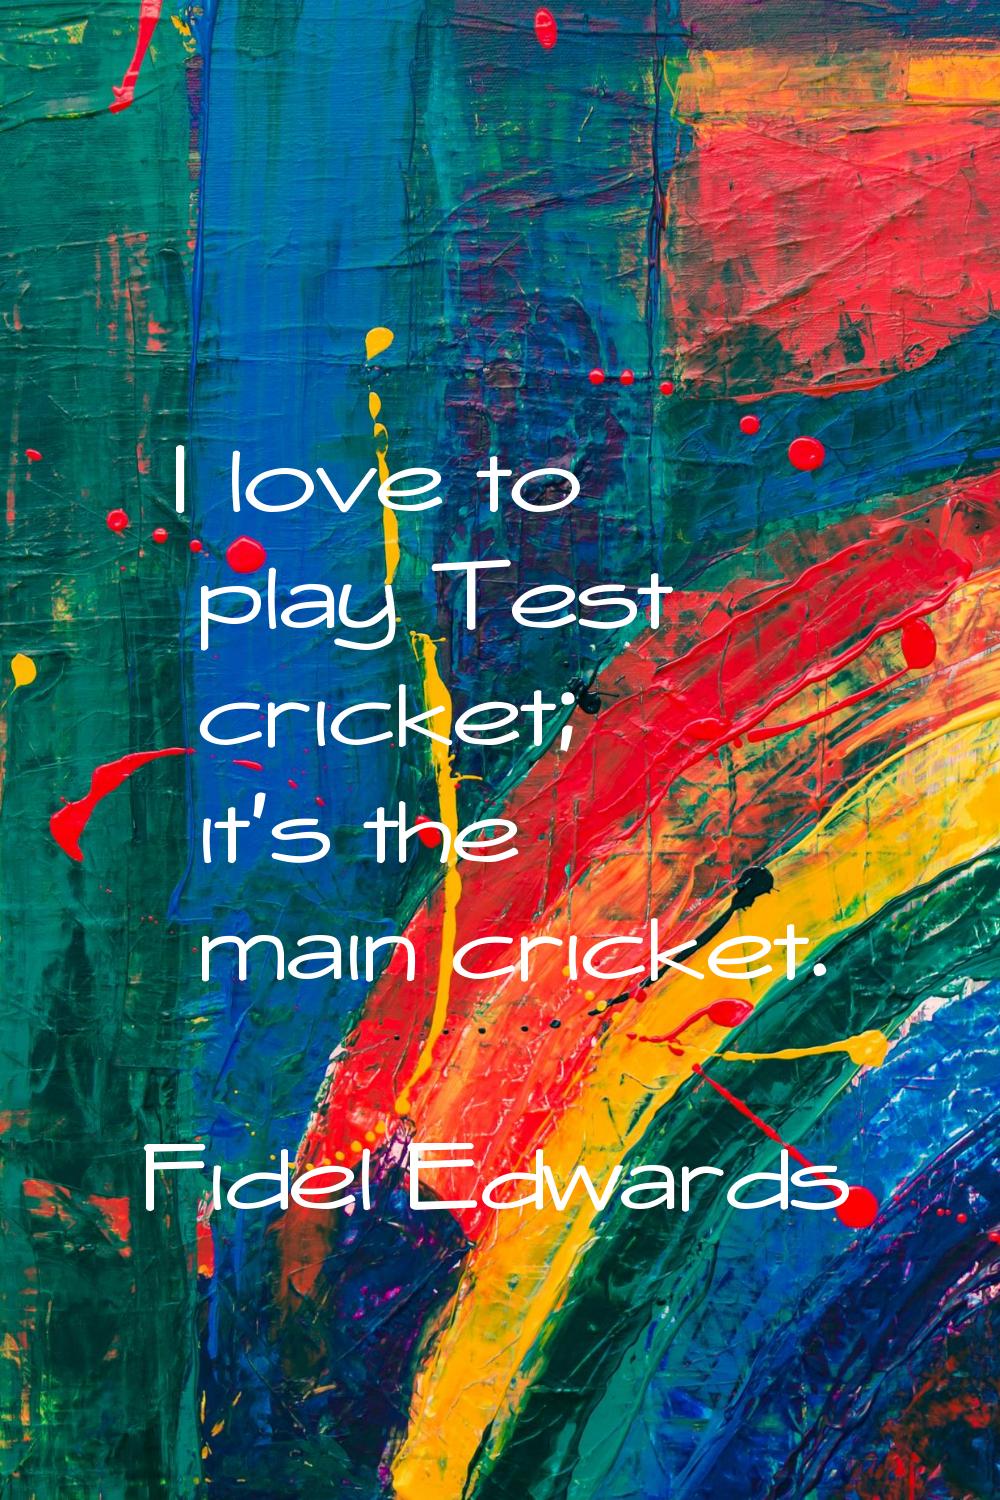 I love to play Test cricket; it's the main cricket.